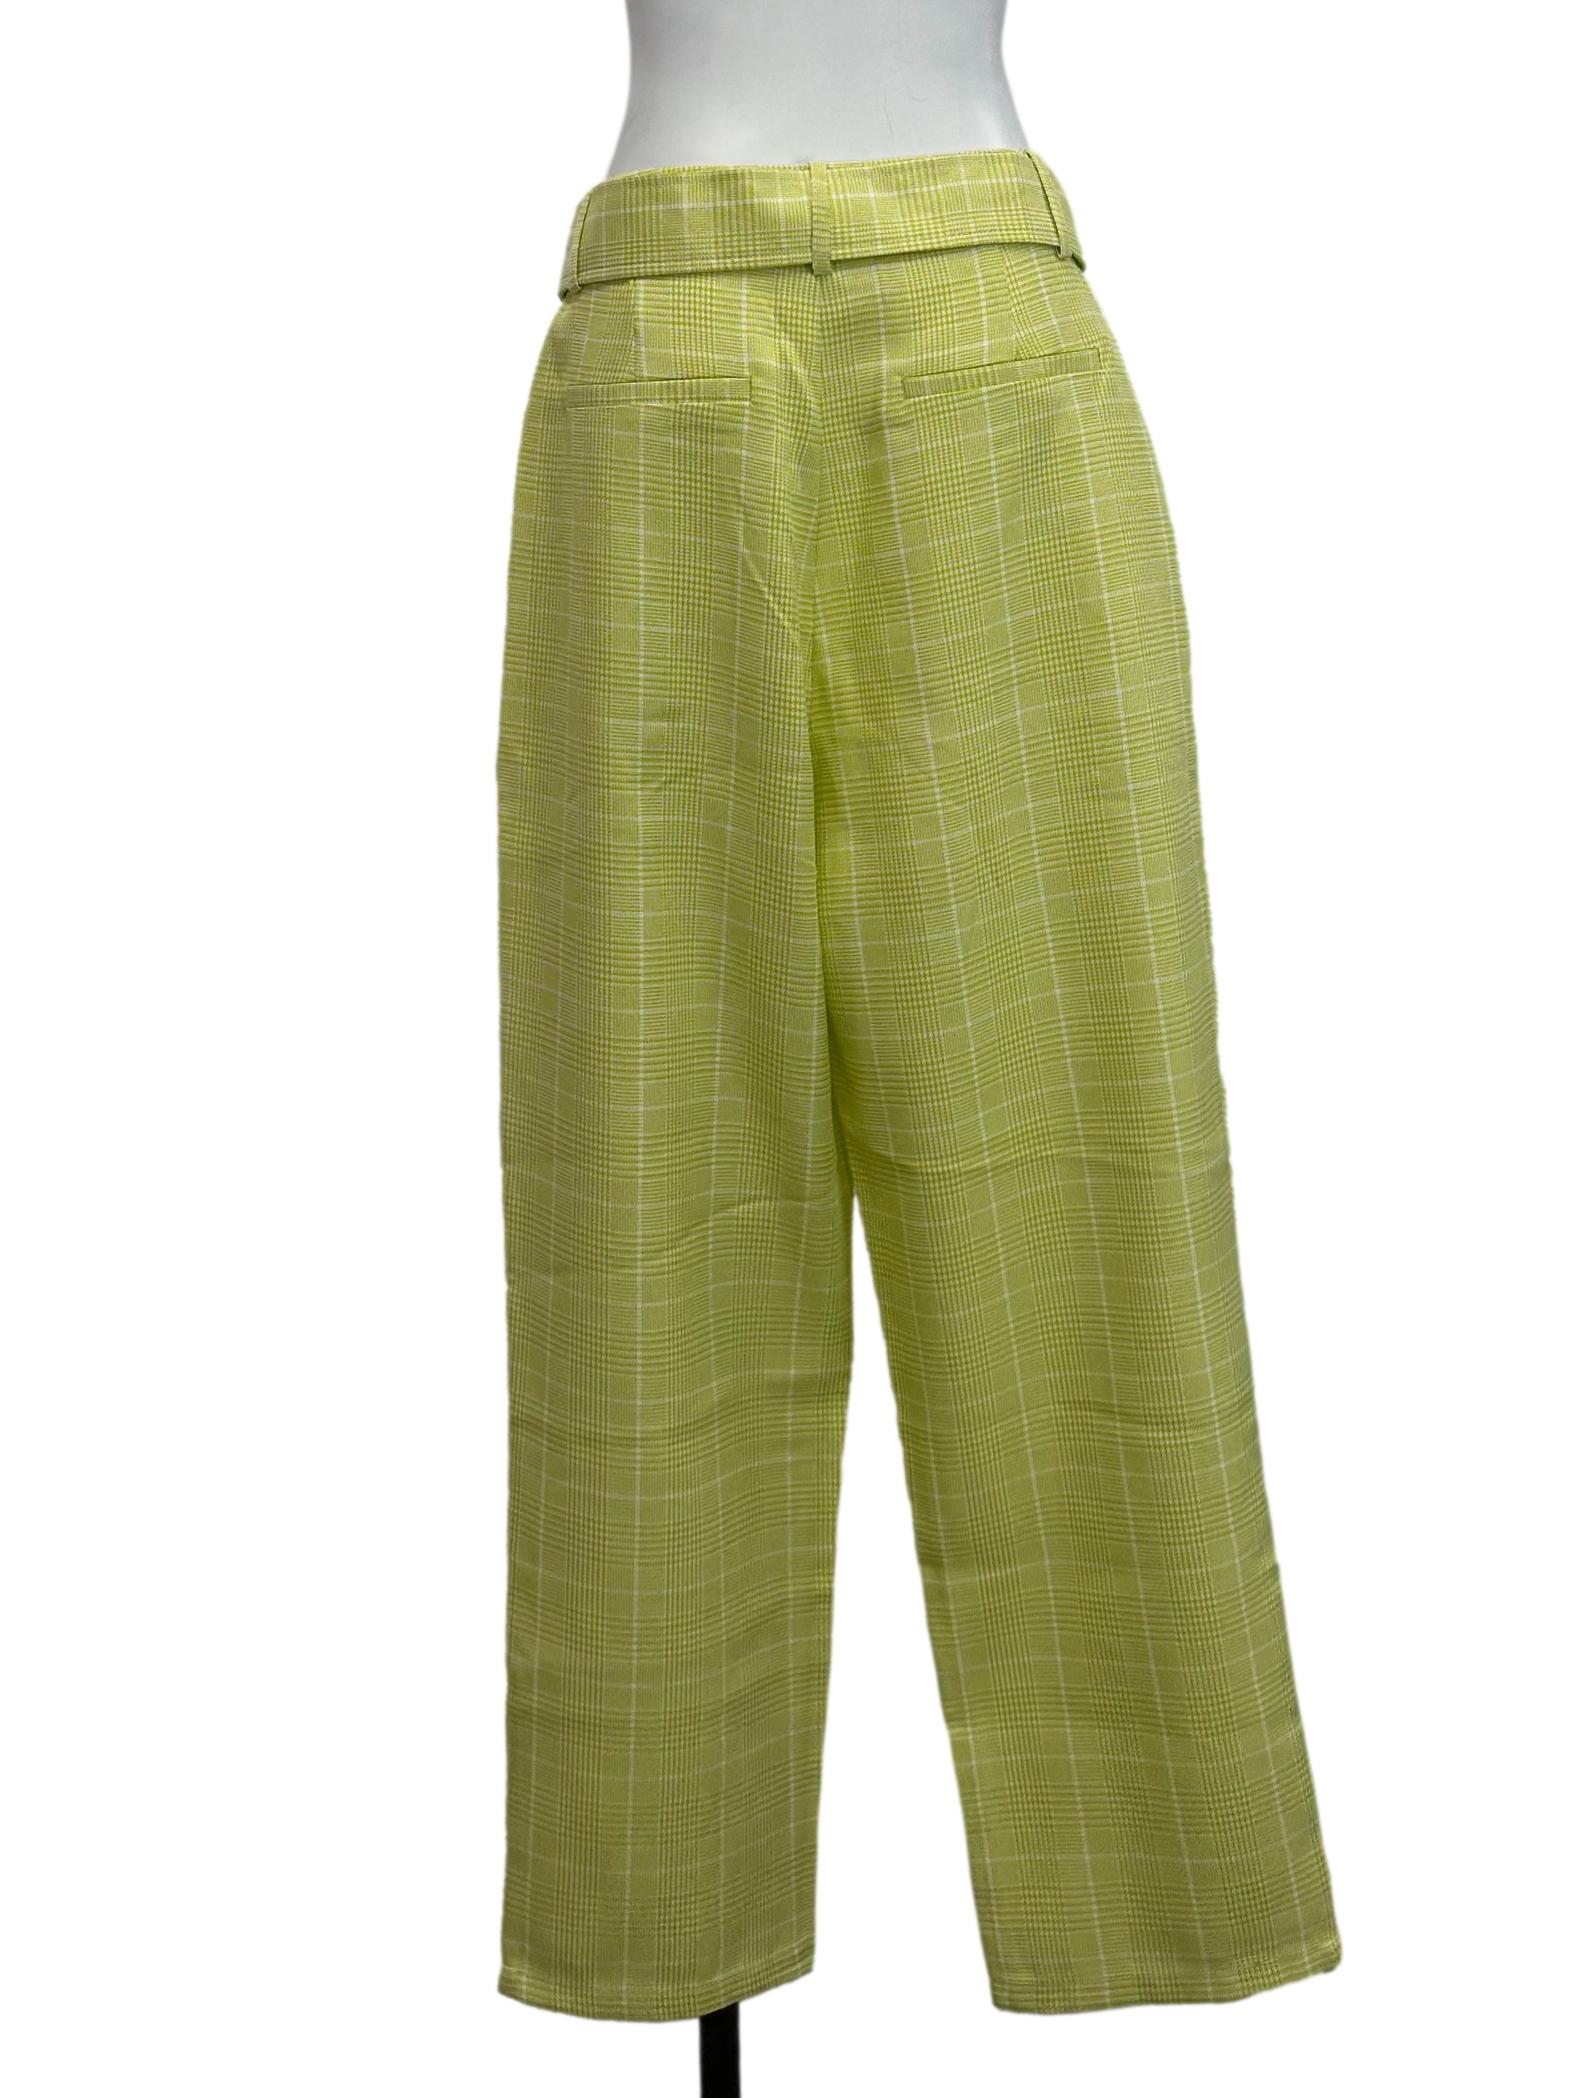 Green Grid Pants